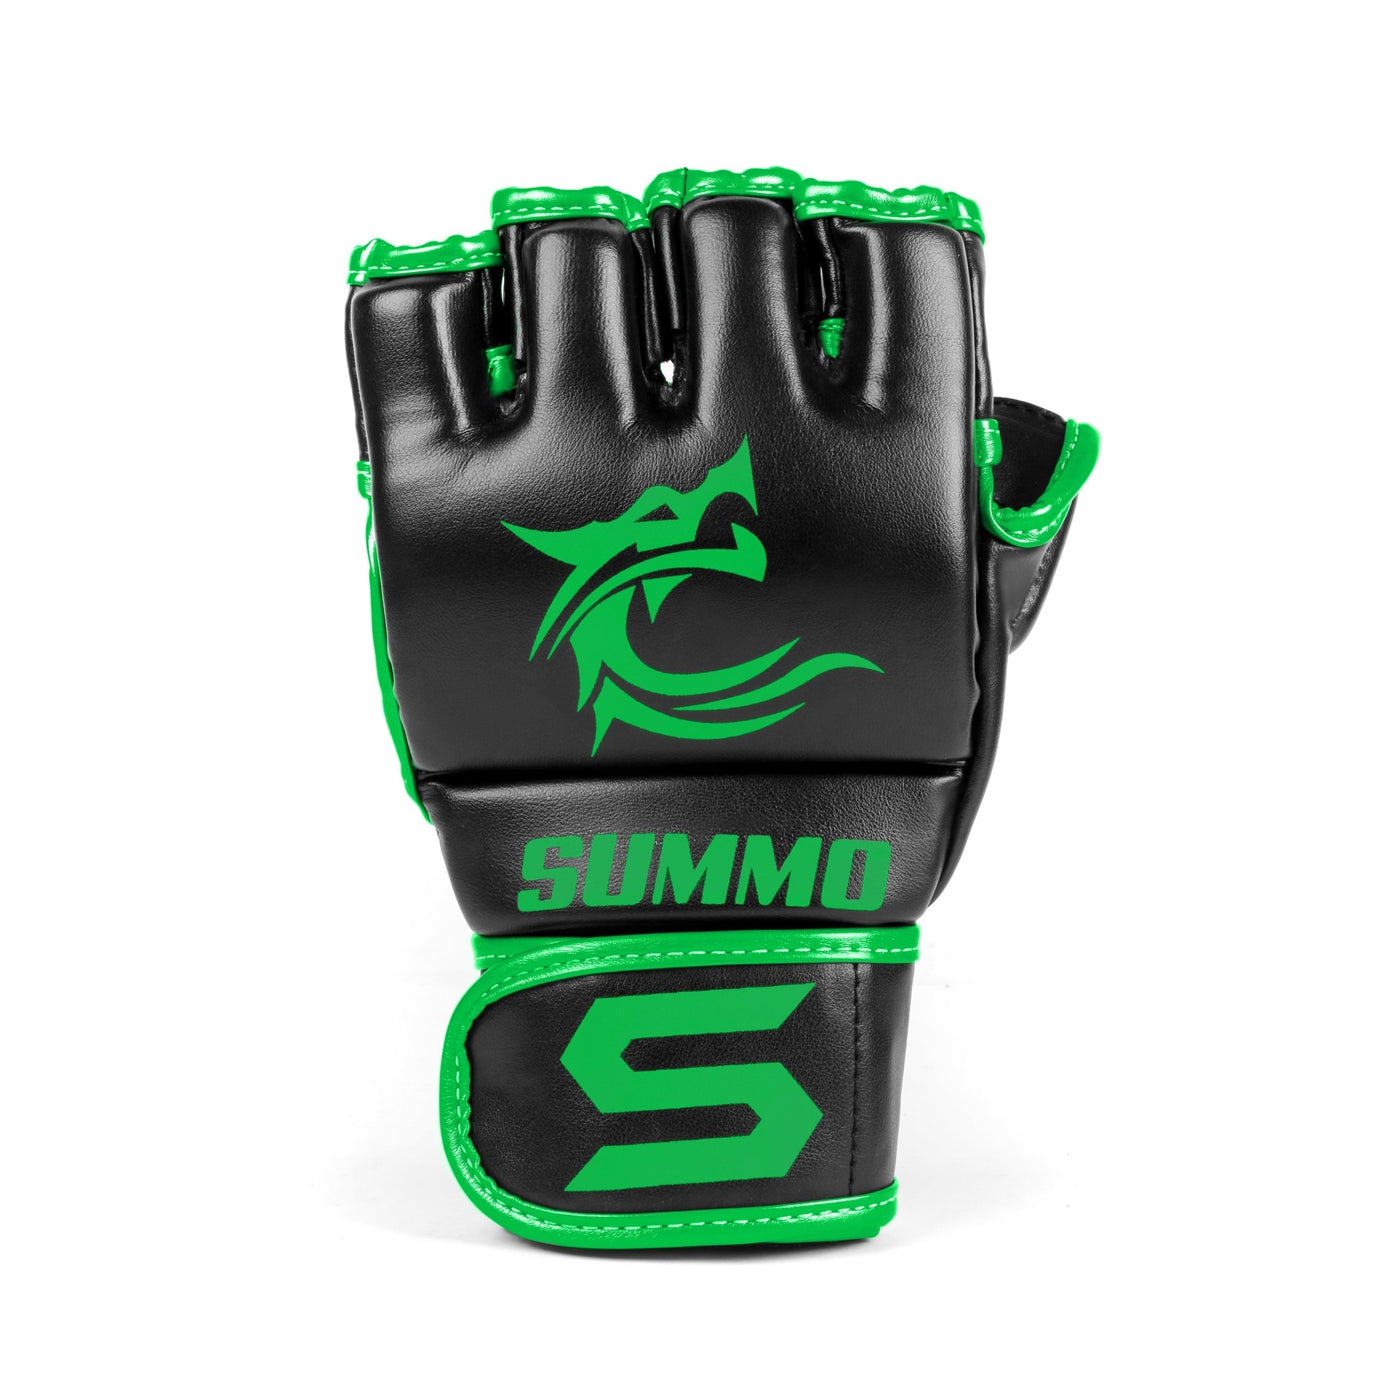 Summo Green MMA Training Gloves - Summo Sports